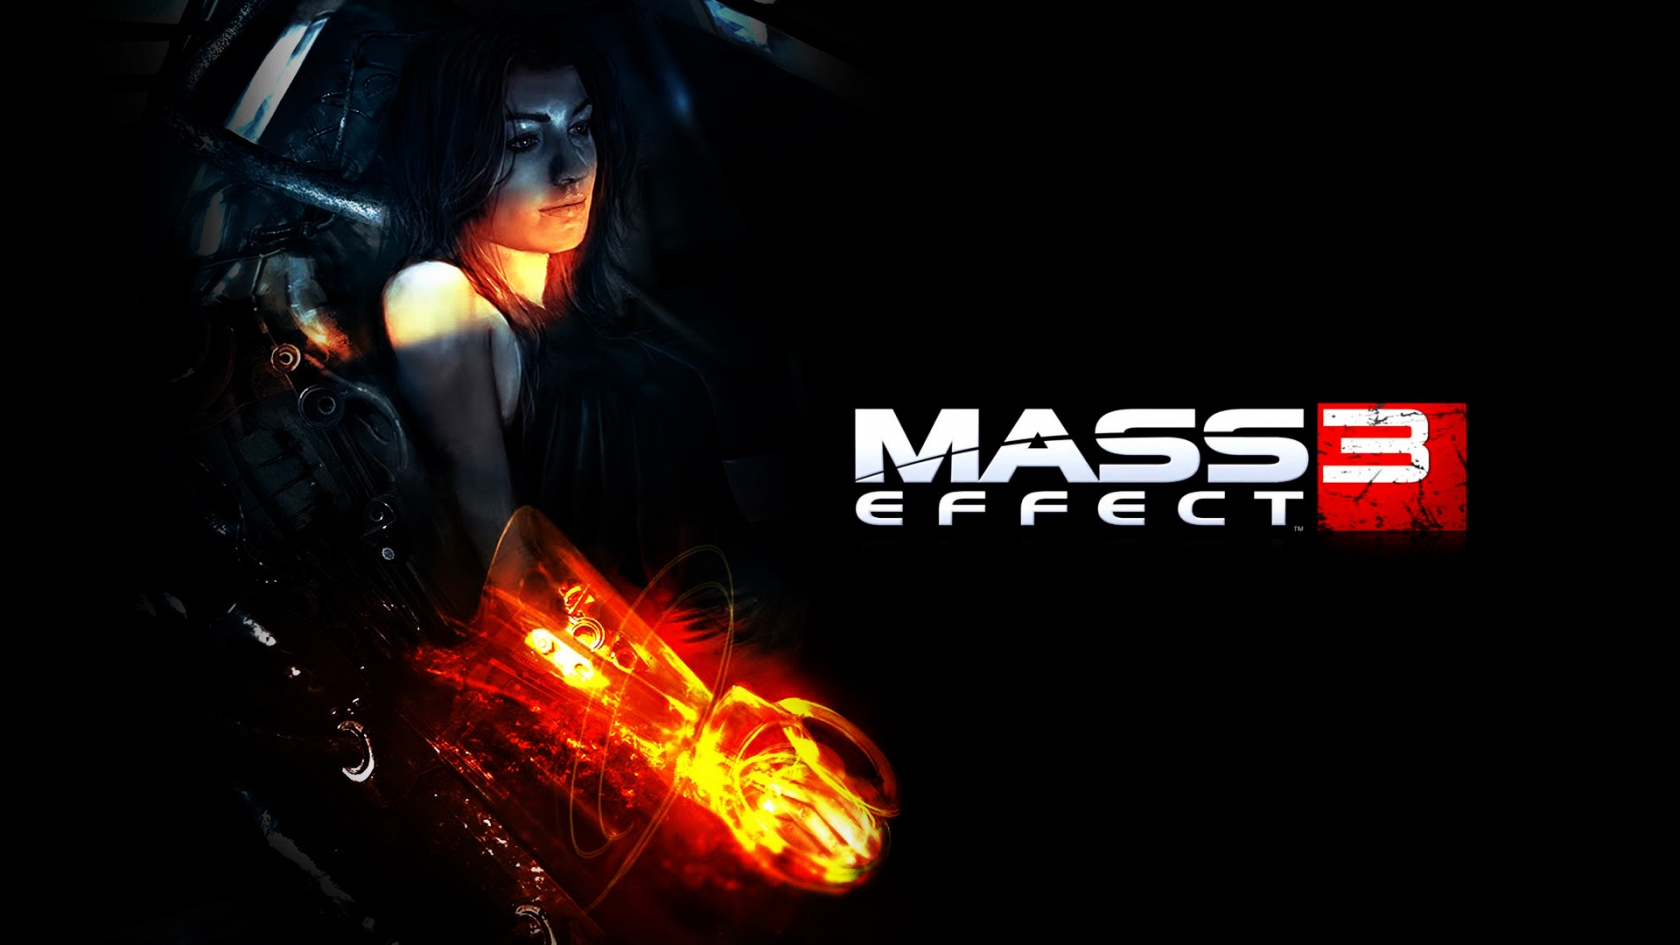 Miranda Mass Effect 3 for 1680 x 945 HDTV resolution